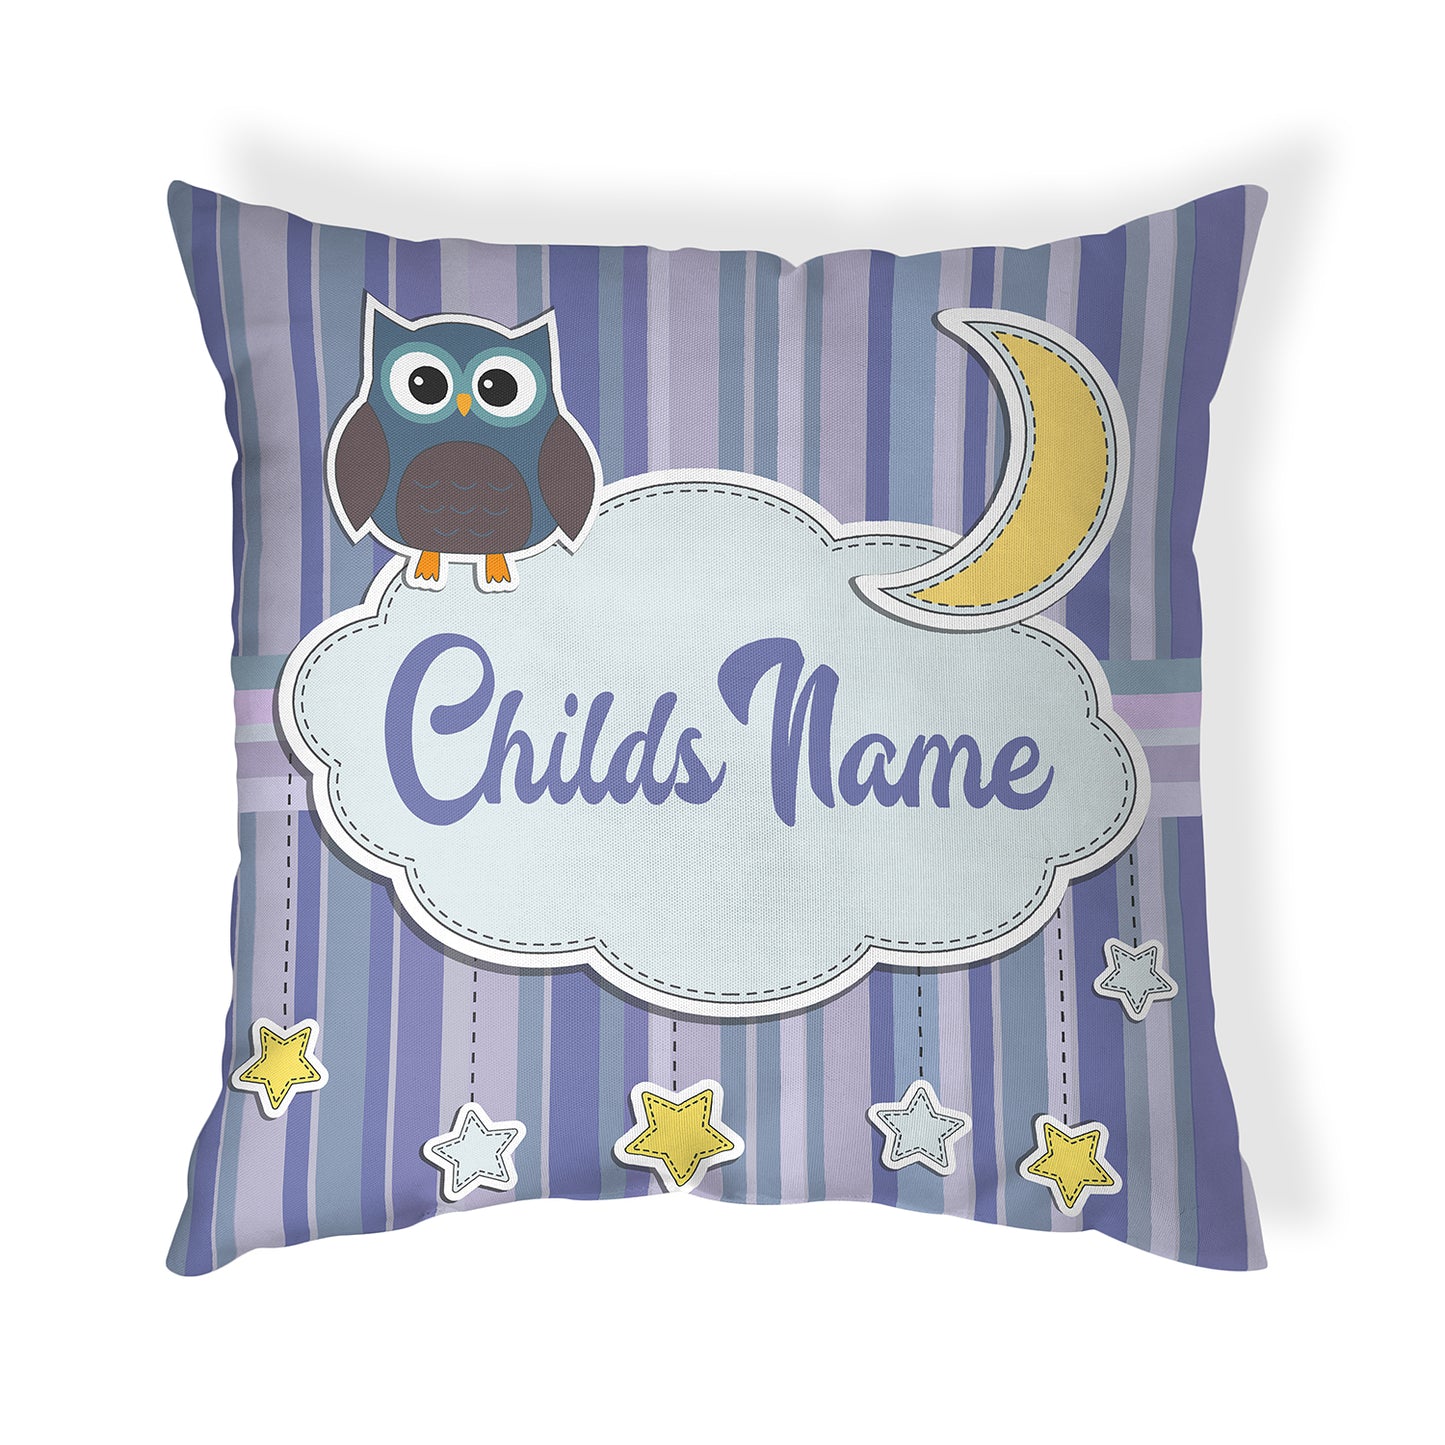 Owl Good Night Moon and Stars Throw Pillow